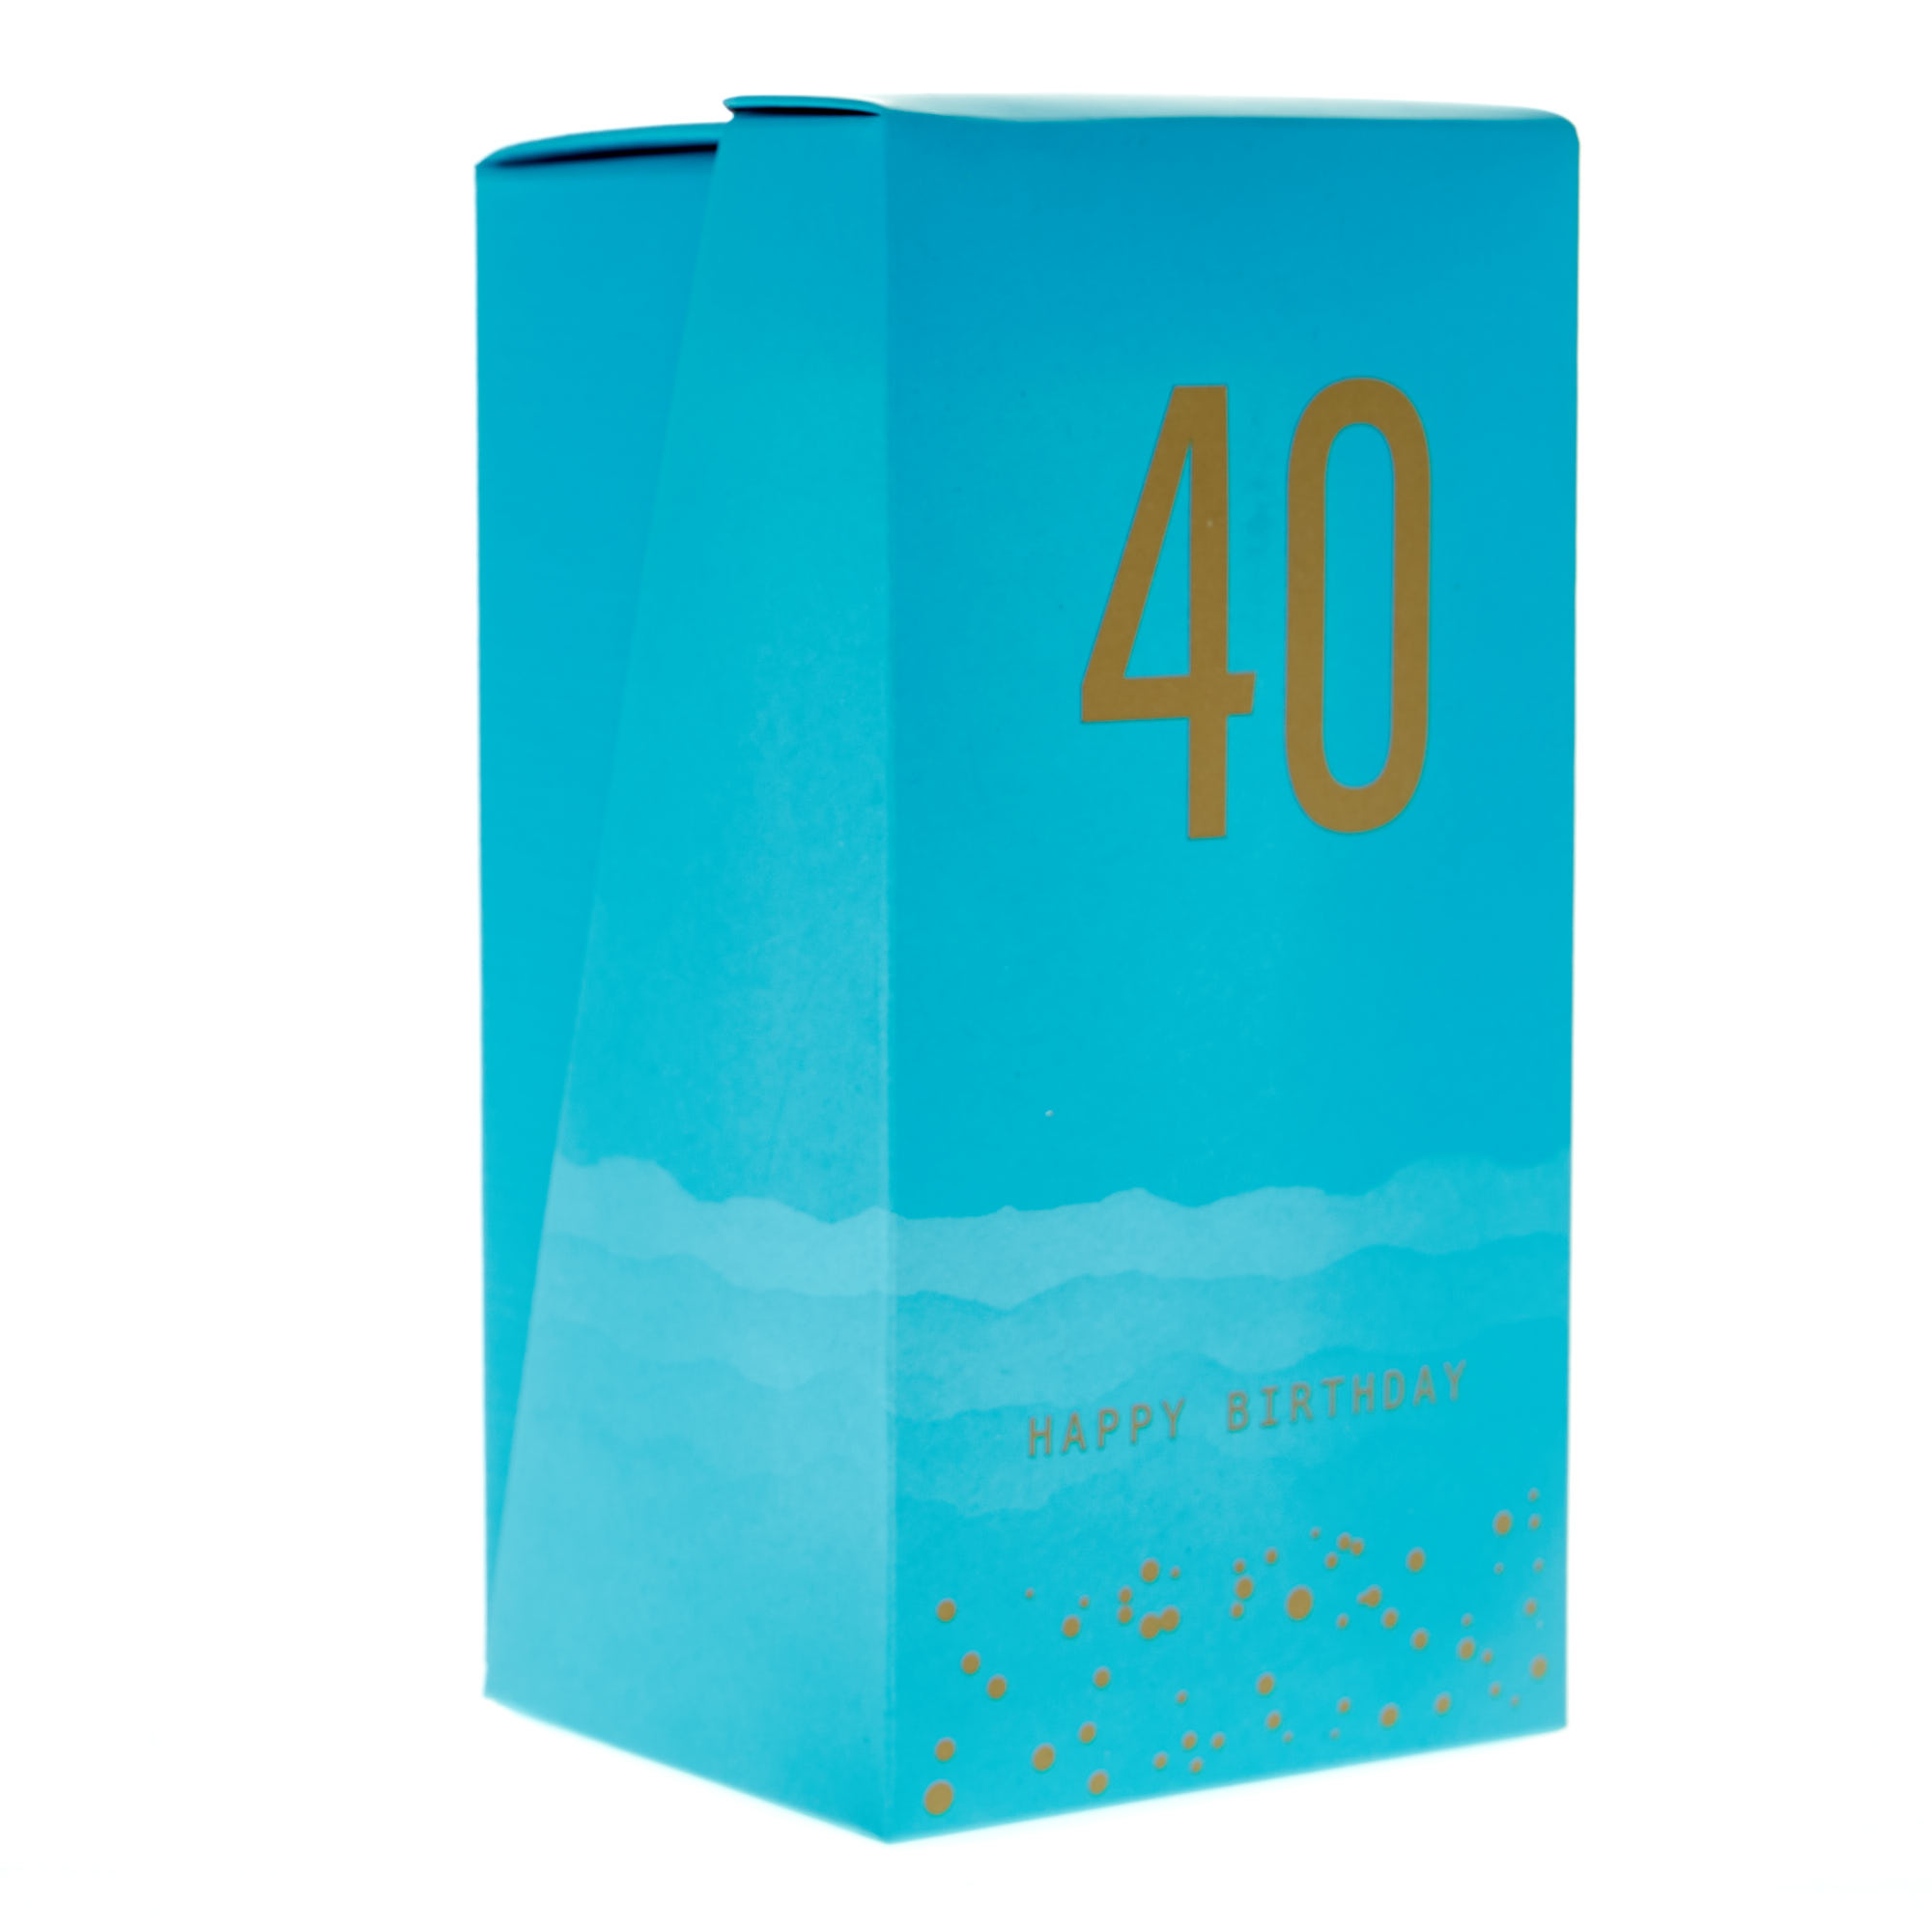 40th Birthday Pint Glass